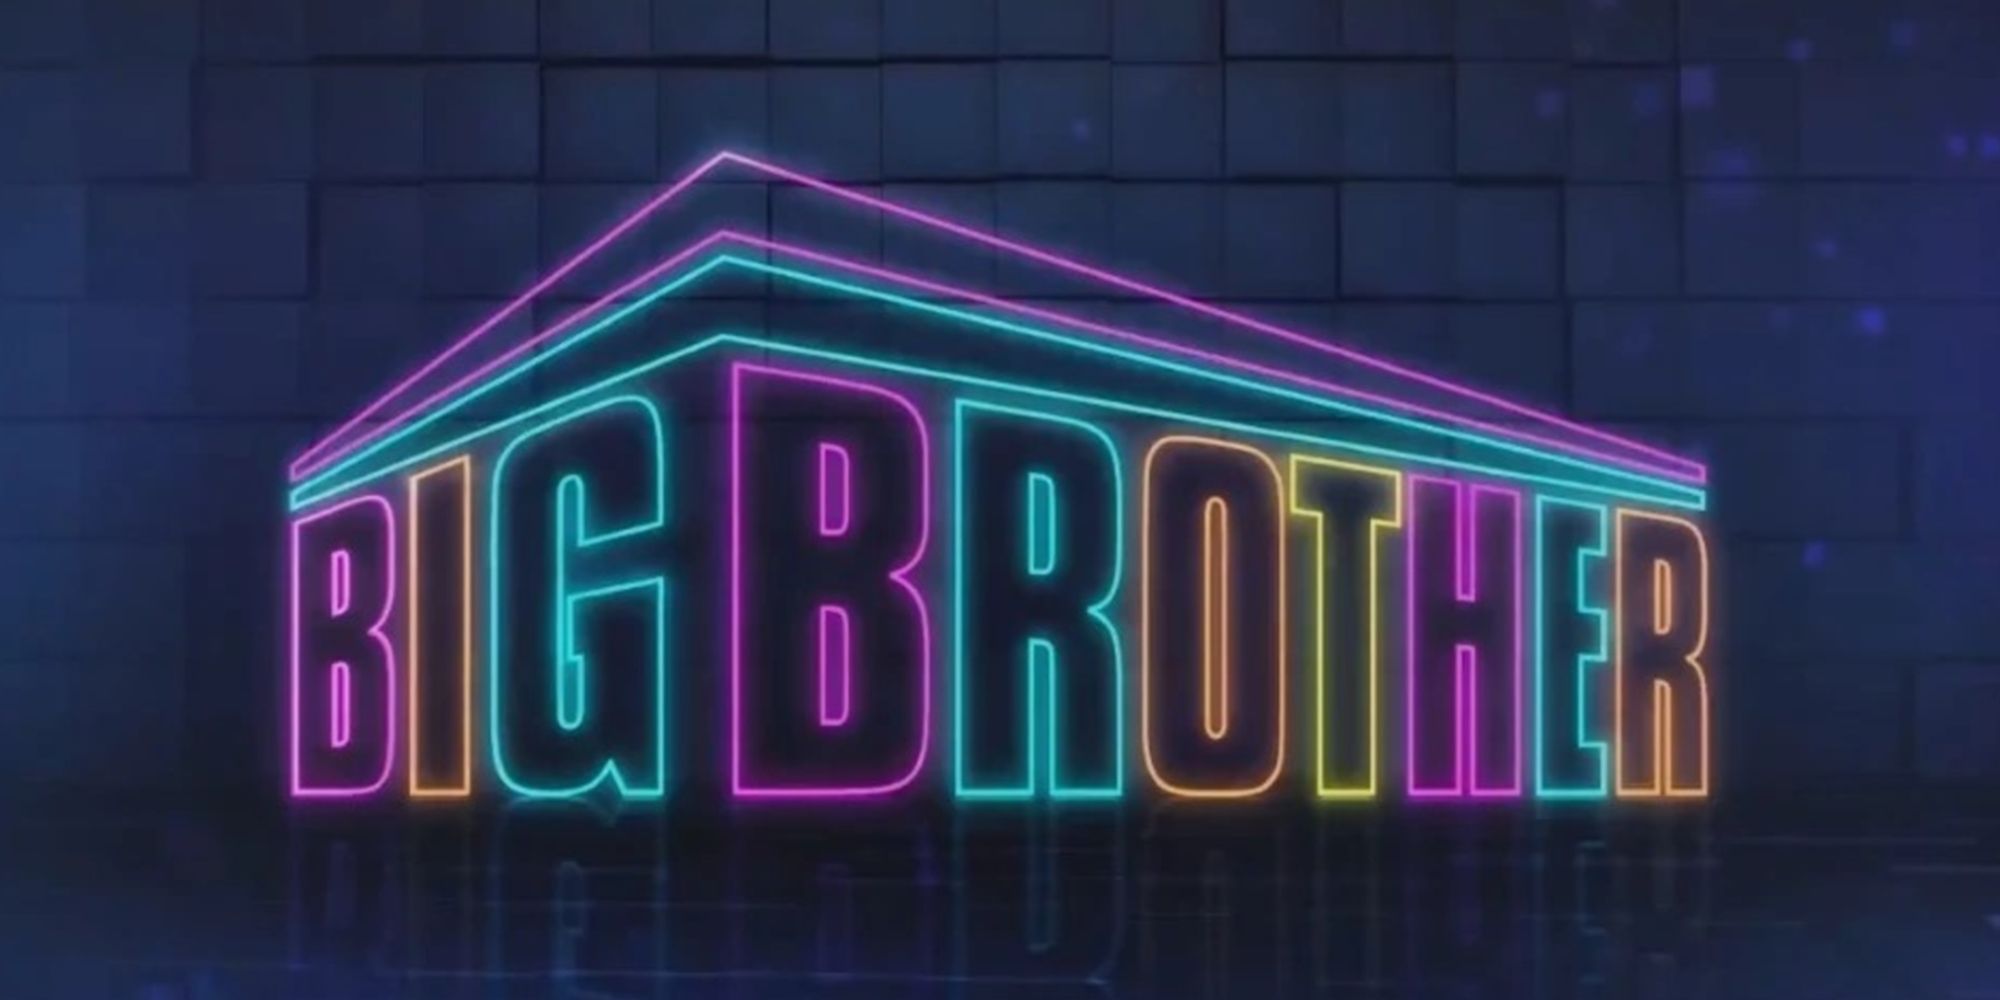 Big Brother 23 premiere logo